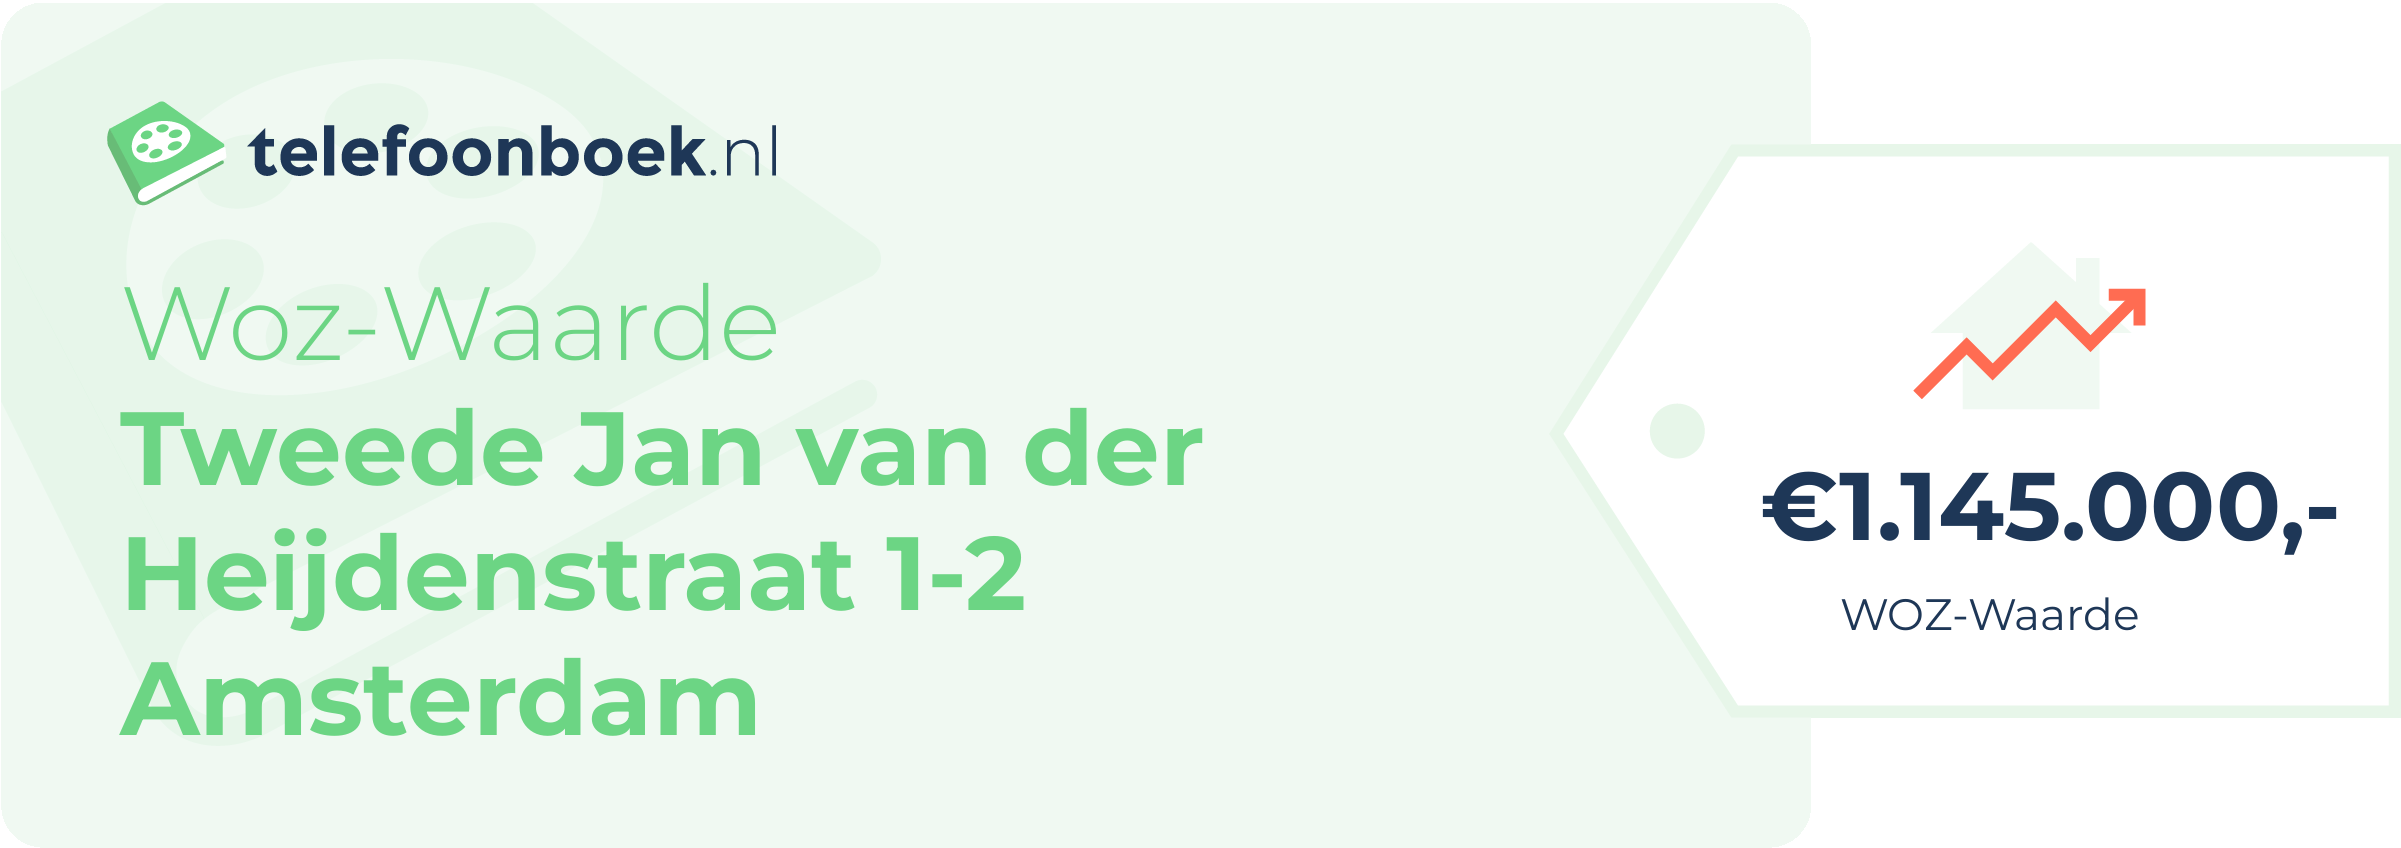 WOZ-waarde Tweede Jan Van Der Heijdenstraat 1-2 Amsterdam